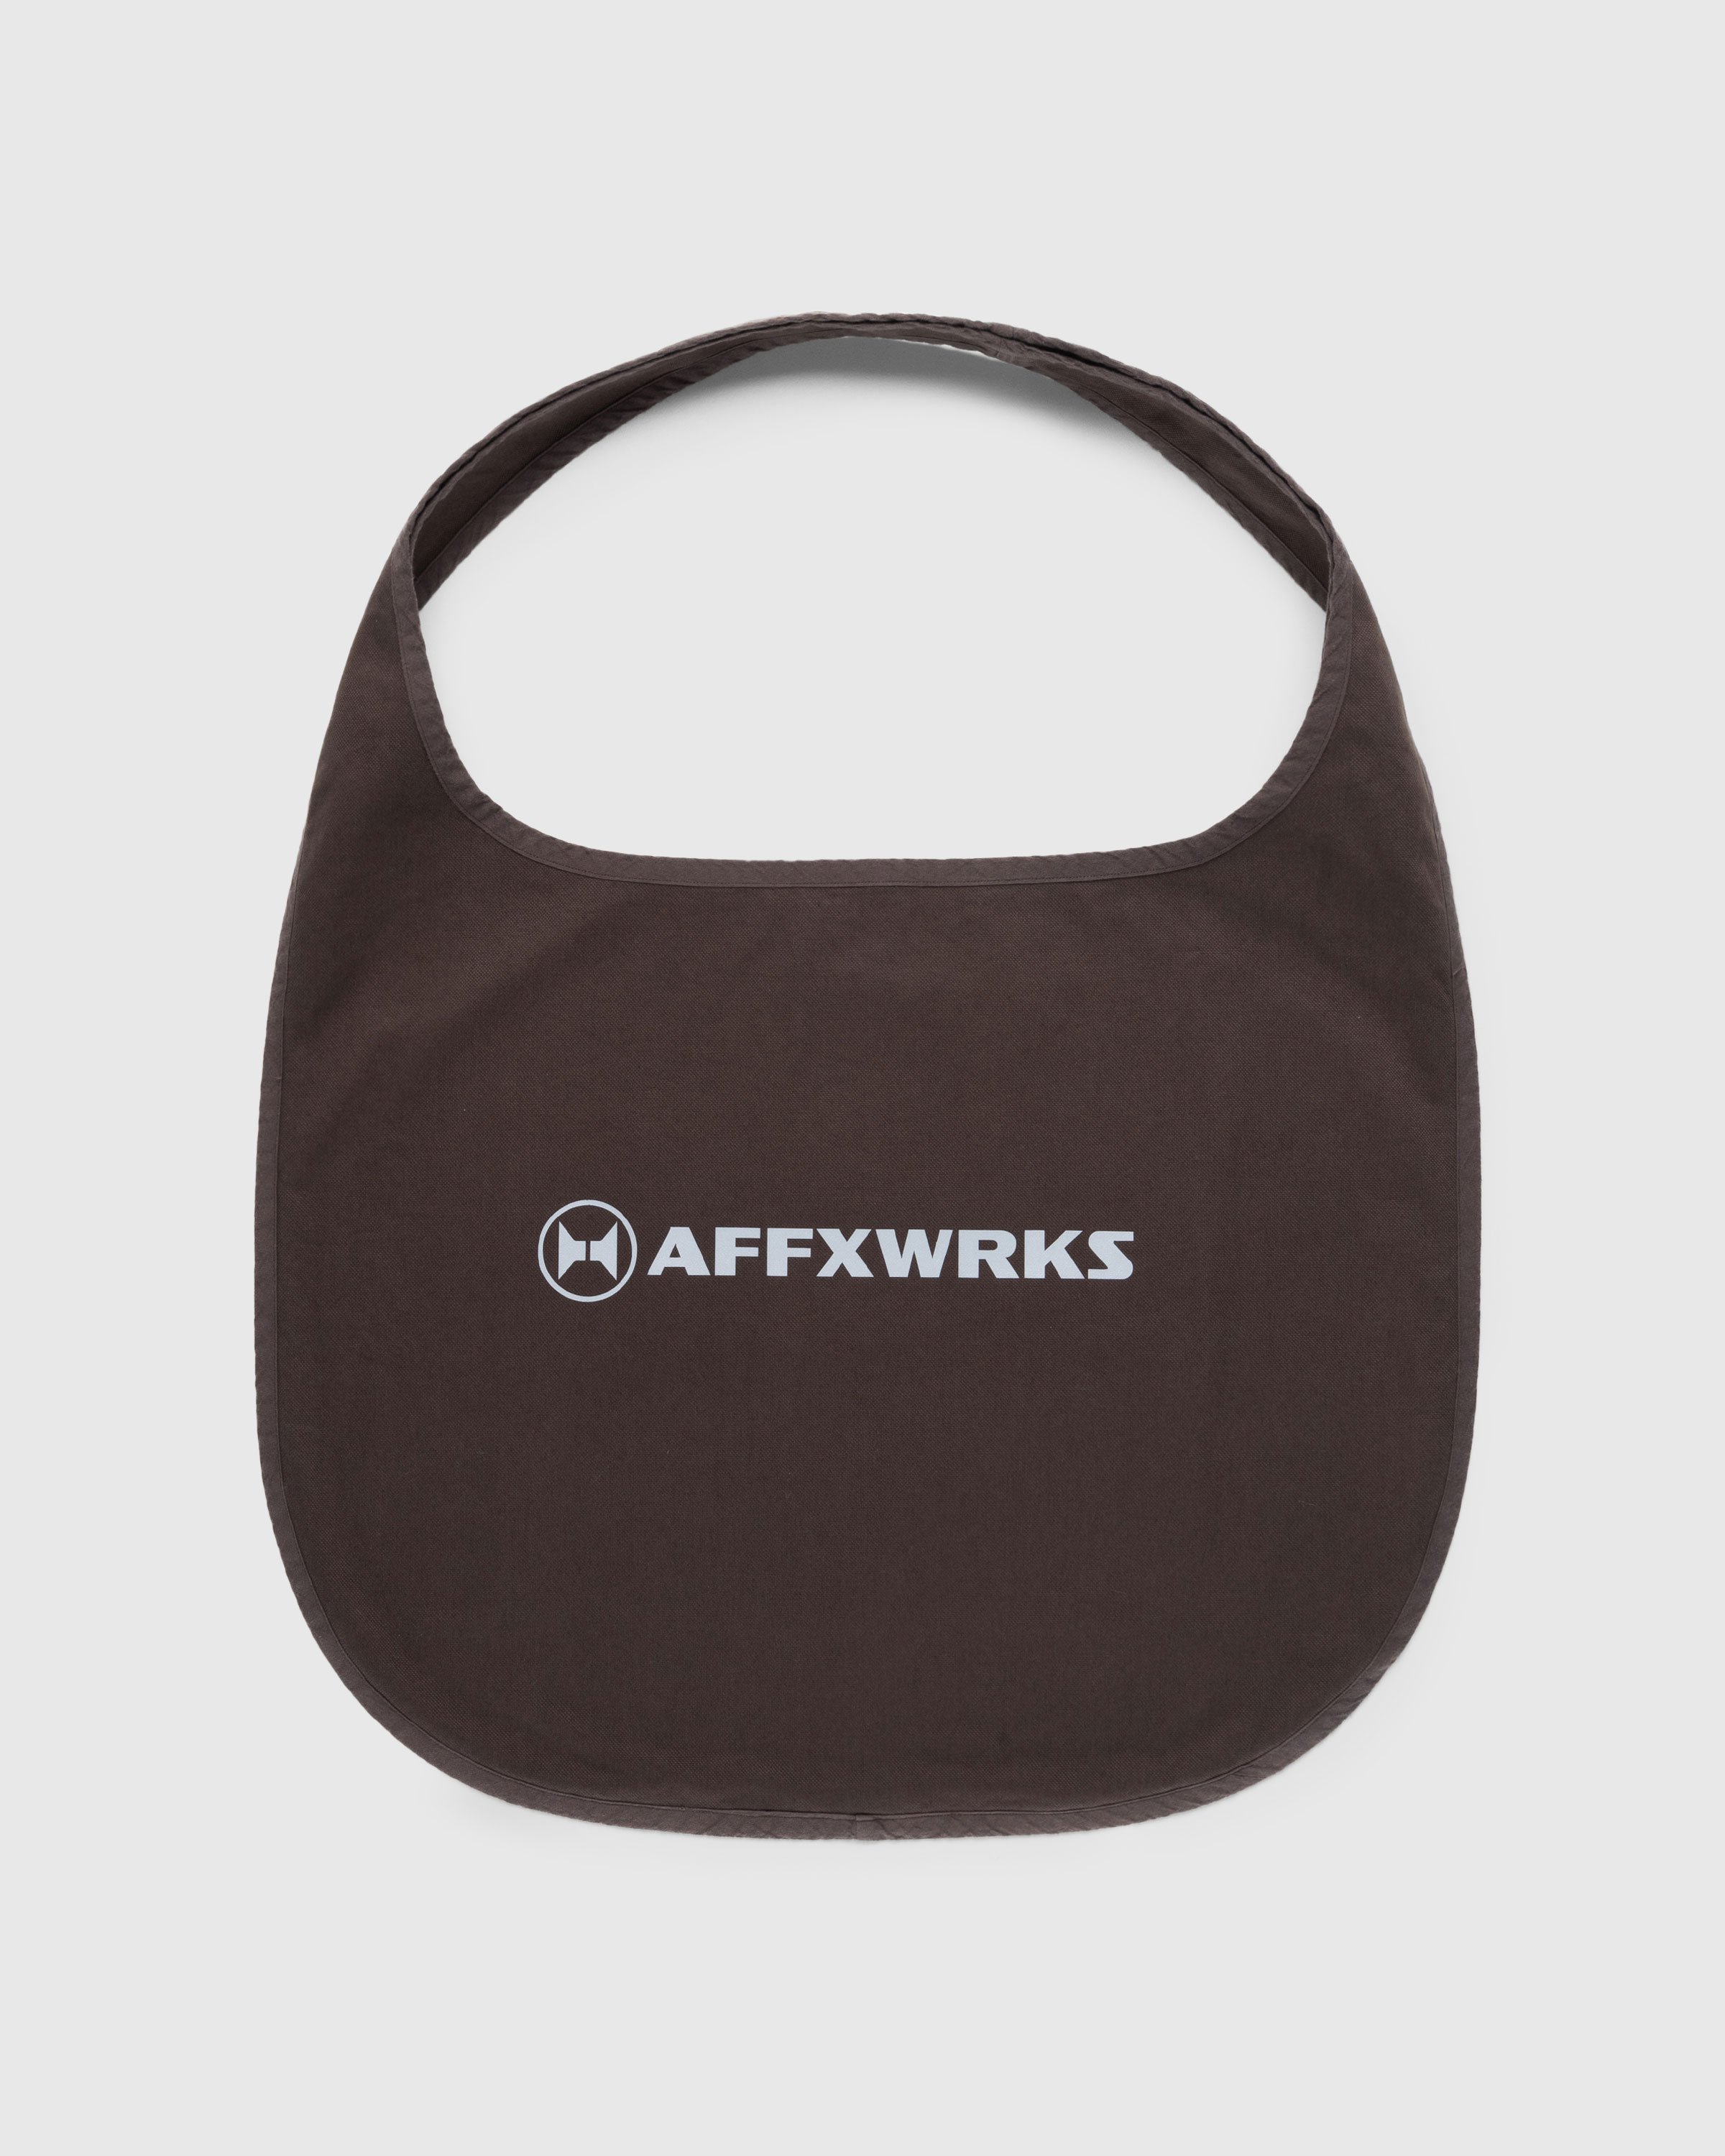 AFFXWRKS - CIRCULAR BAG - Accessories - Brown - Image 1